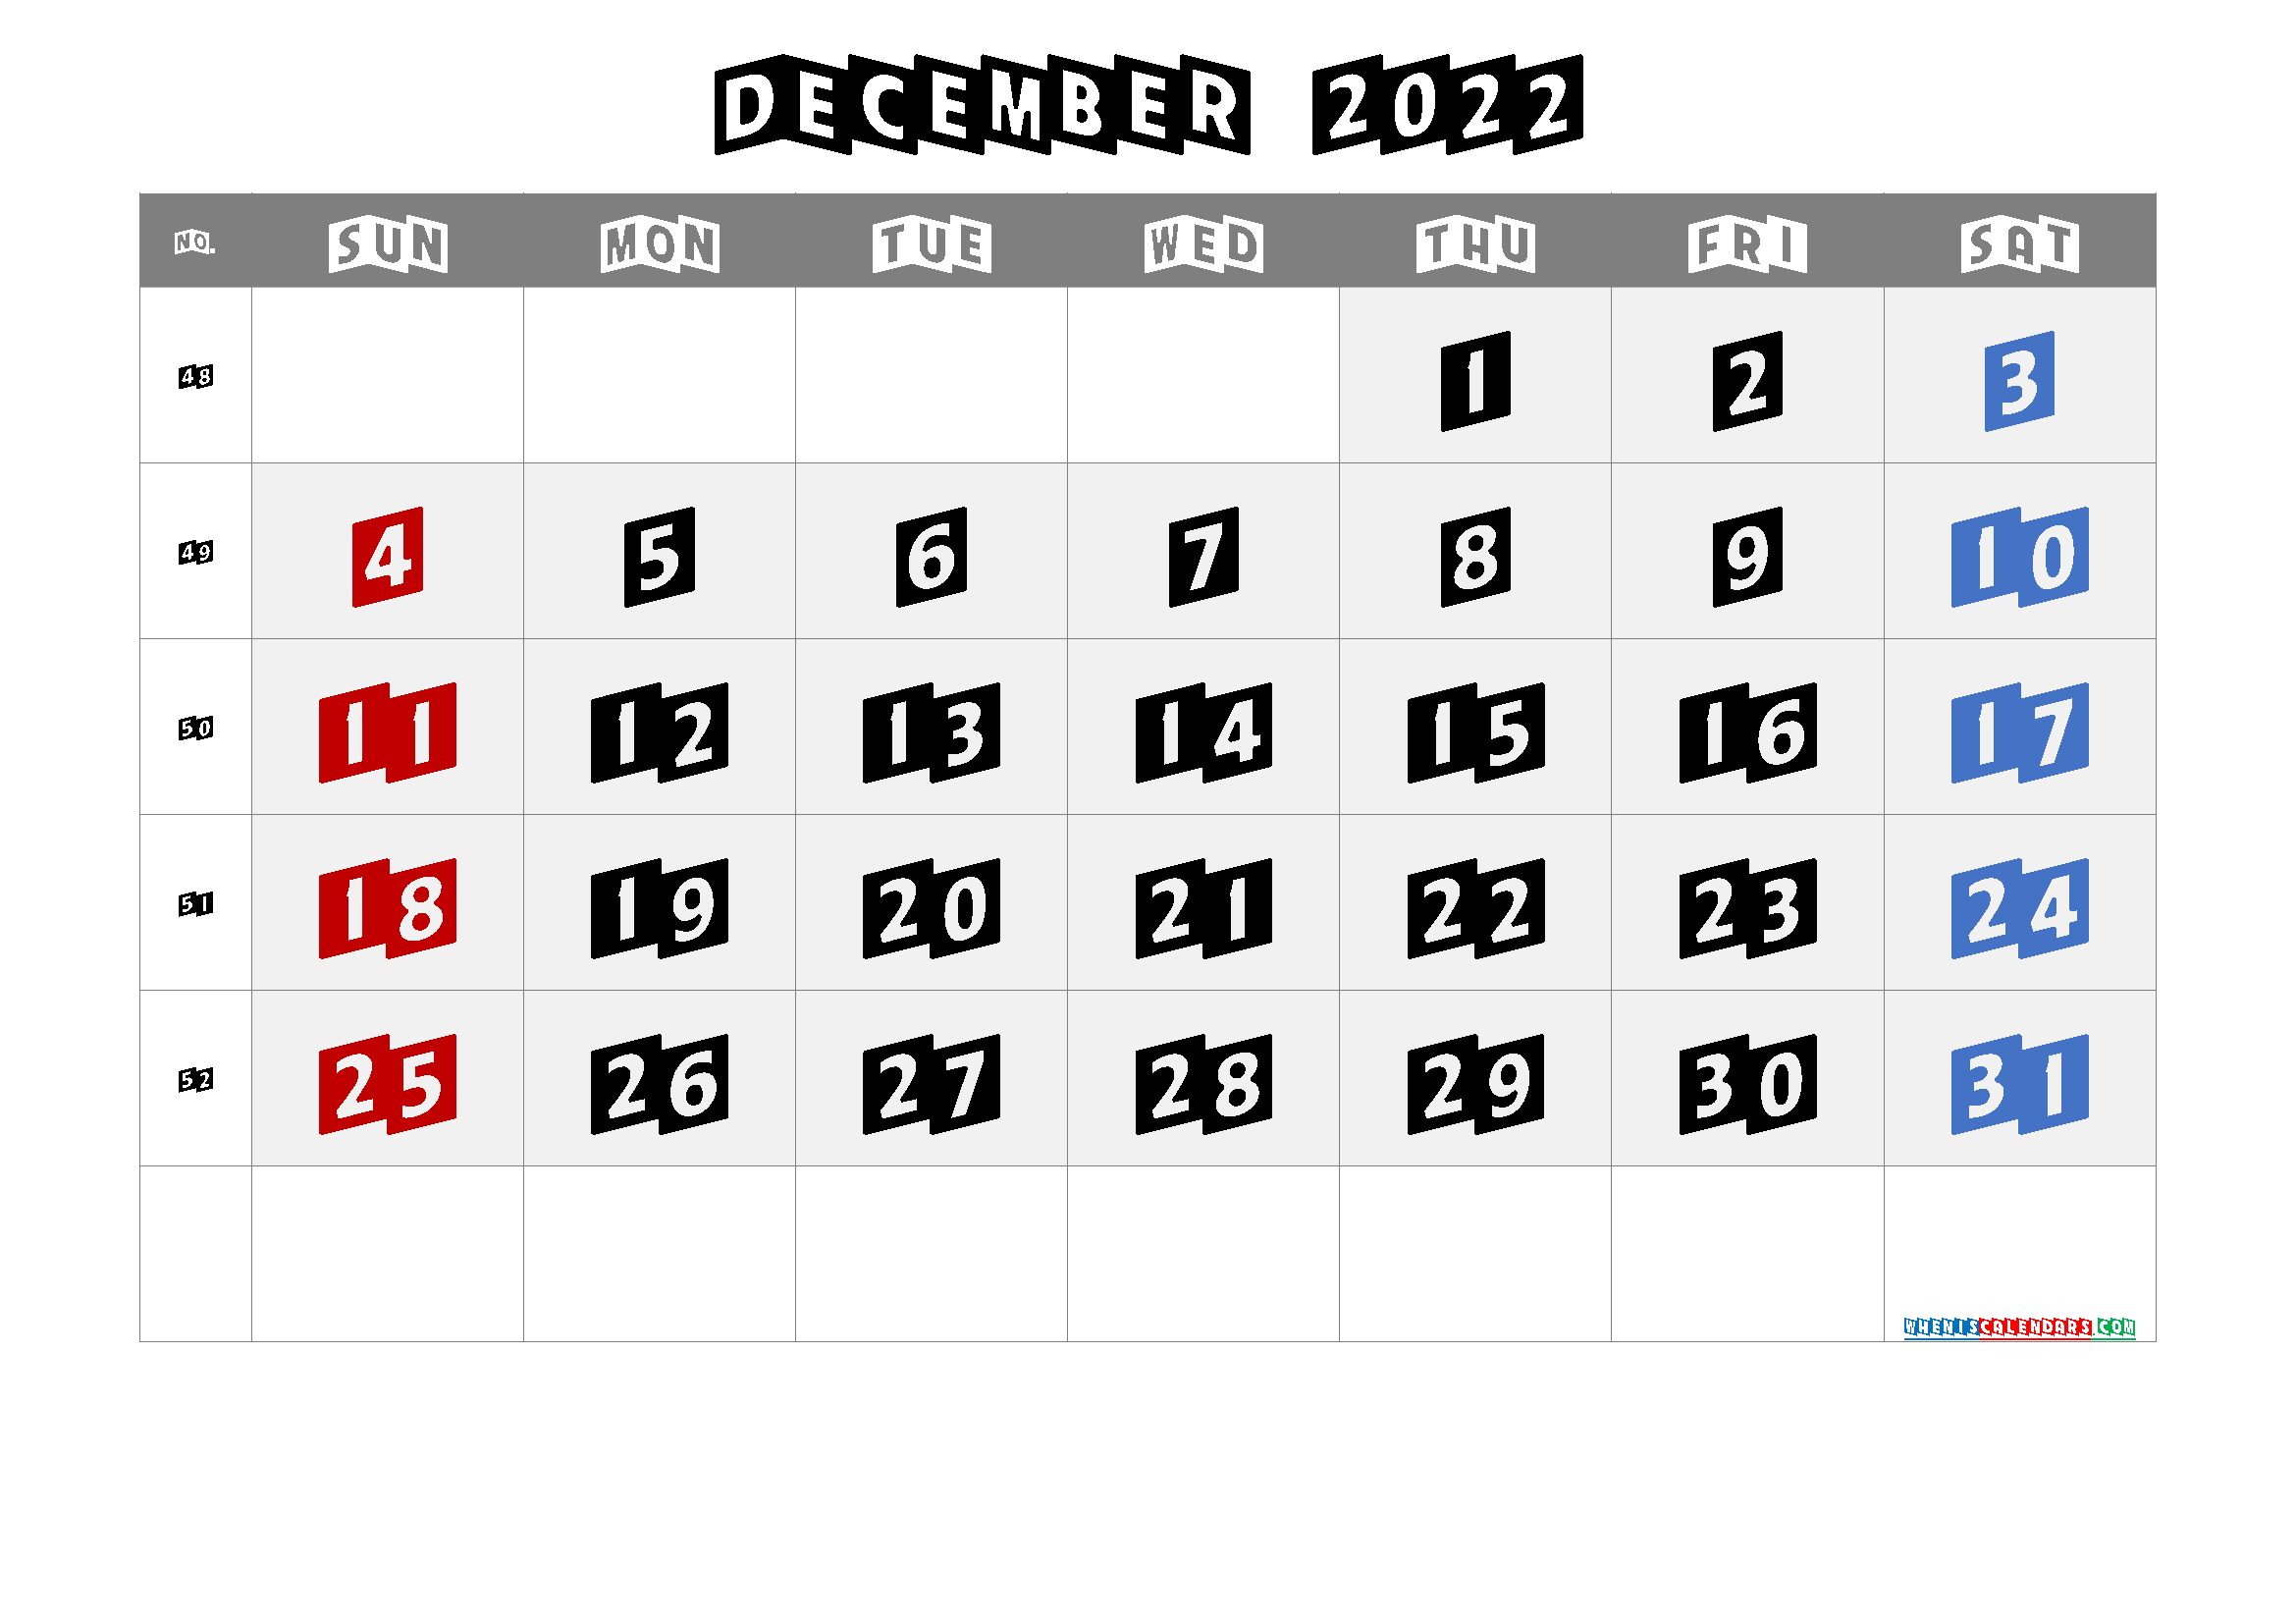 Cute December 2022 Calendar